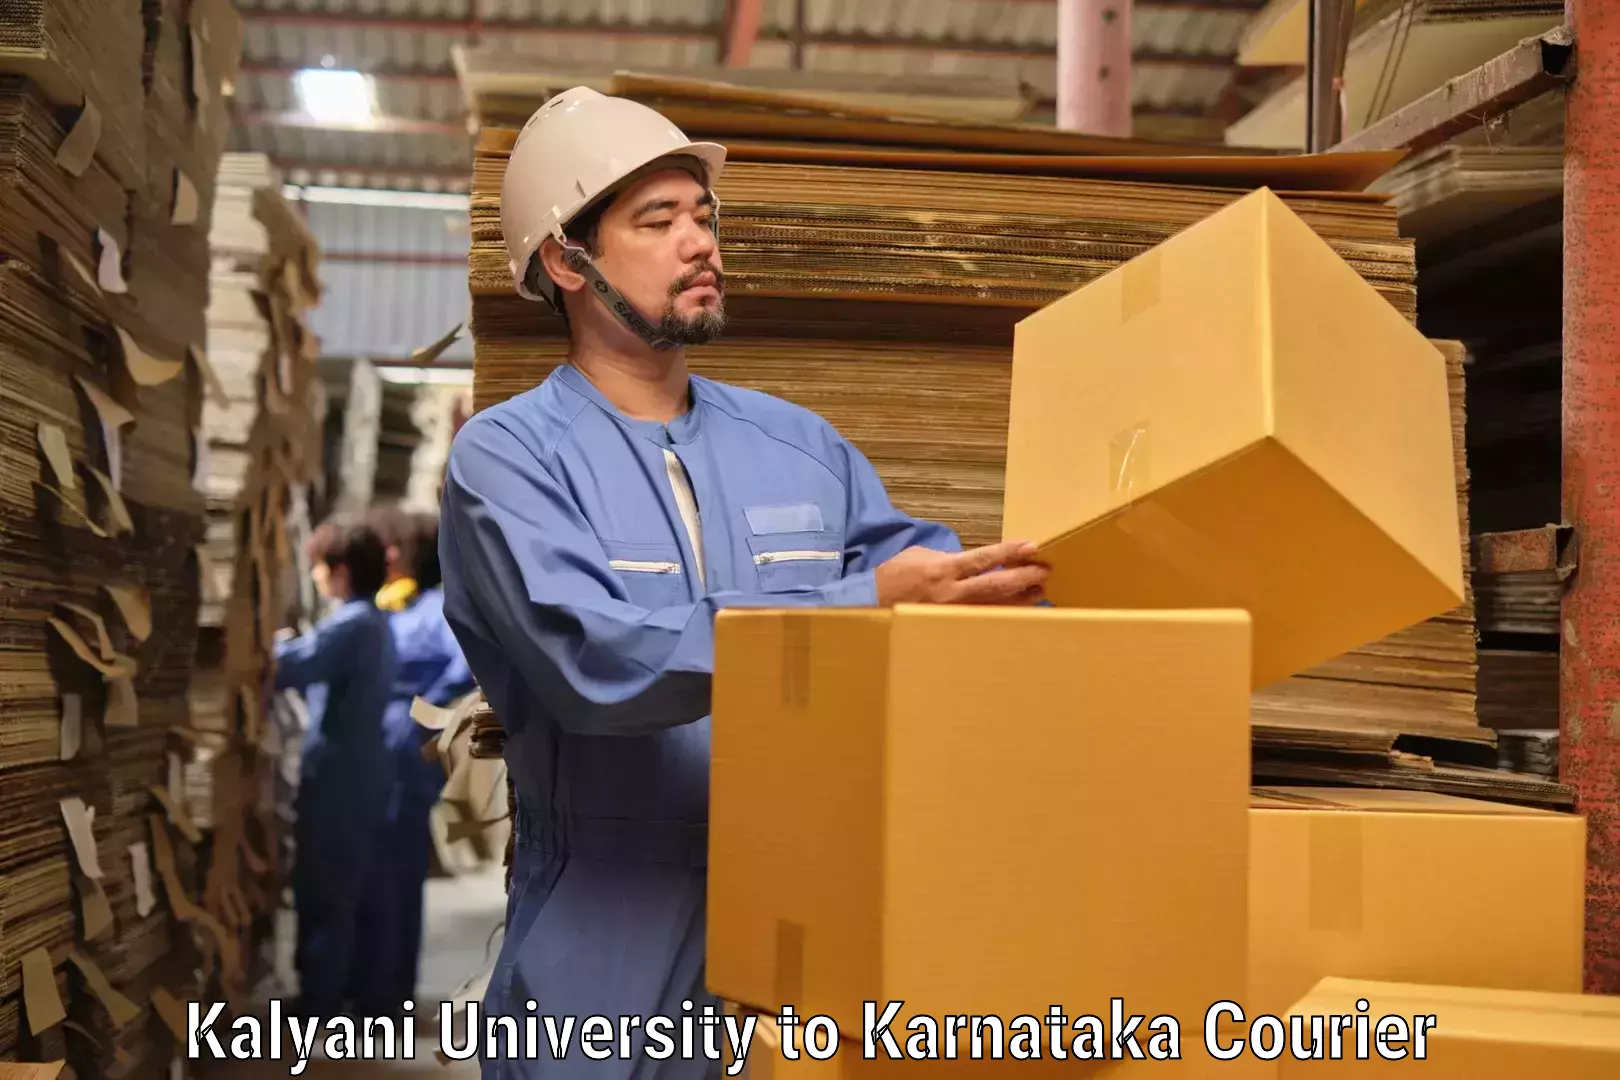 Professional parcel services Kalyani University to Karnataka